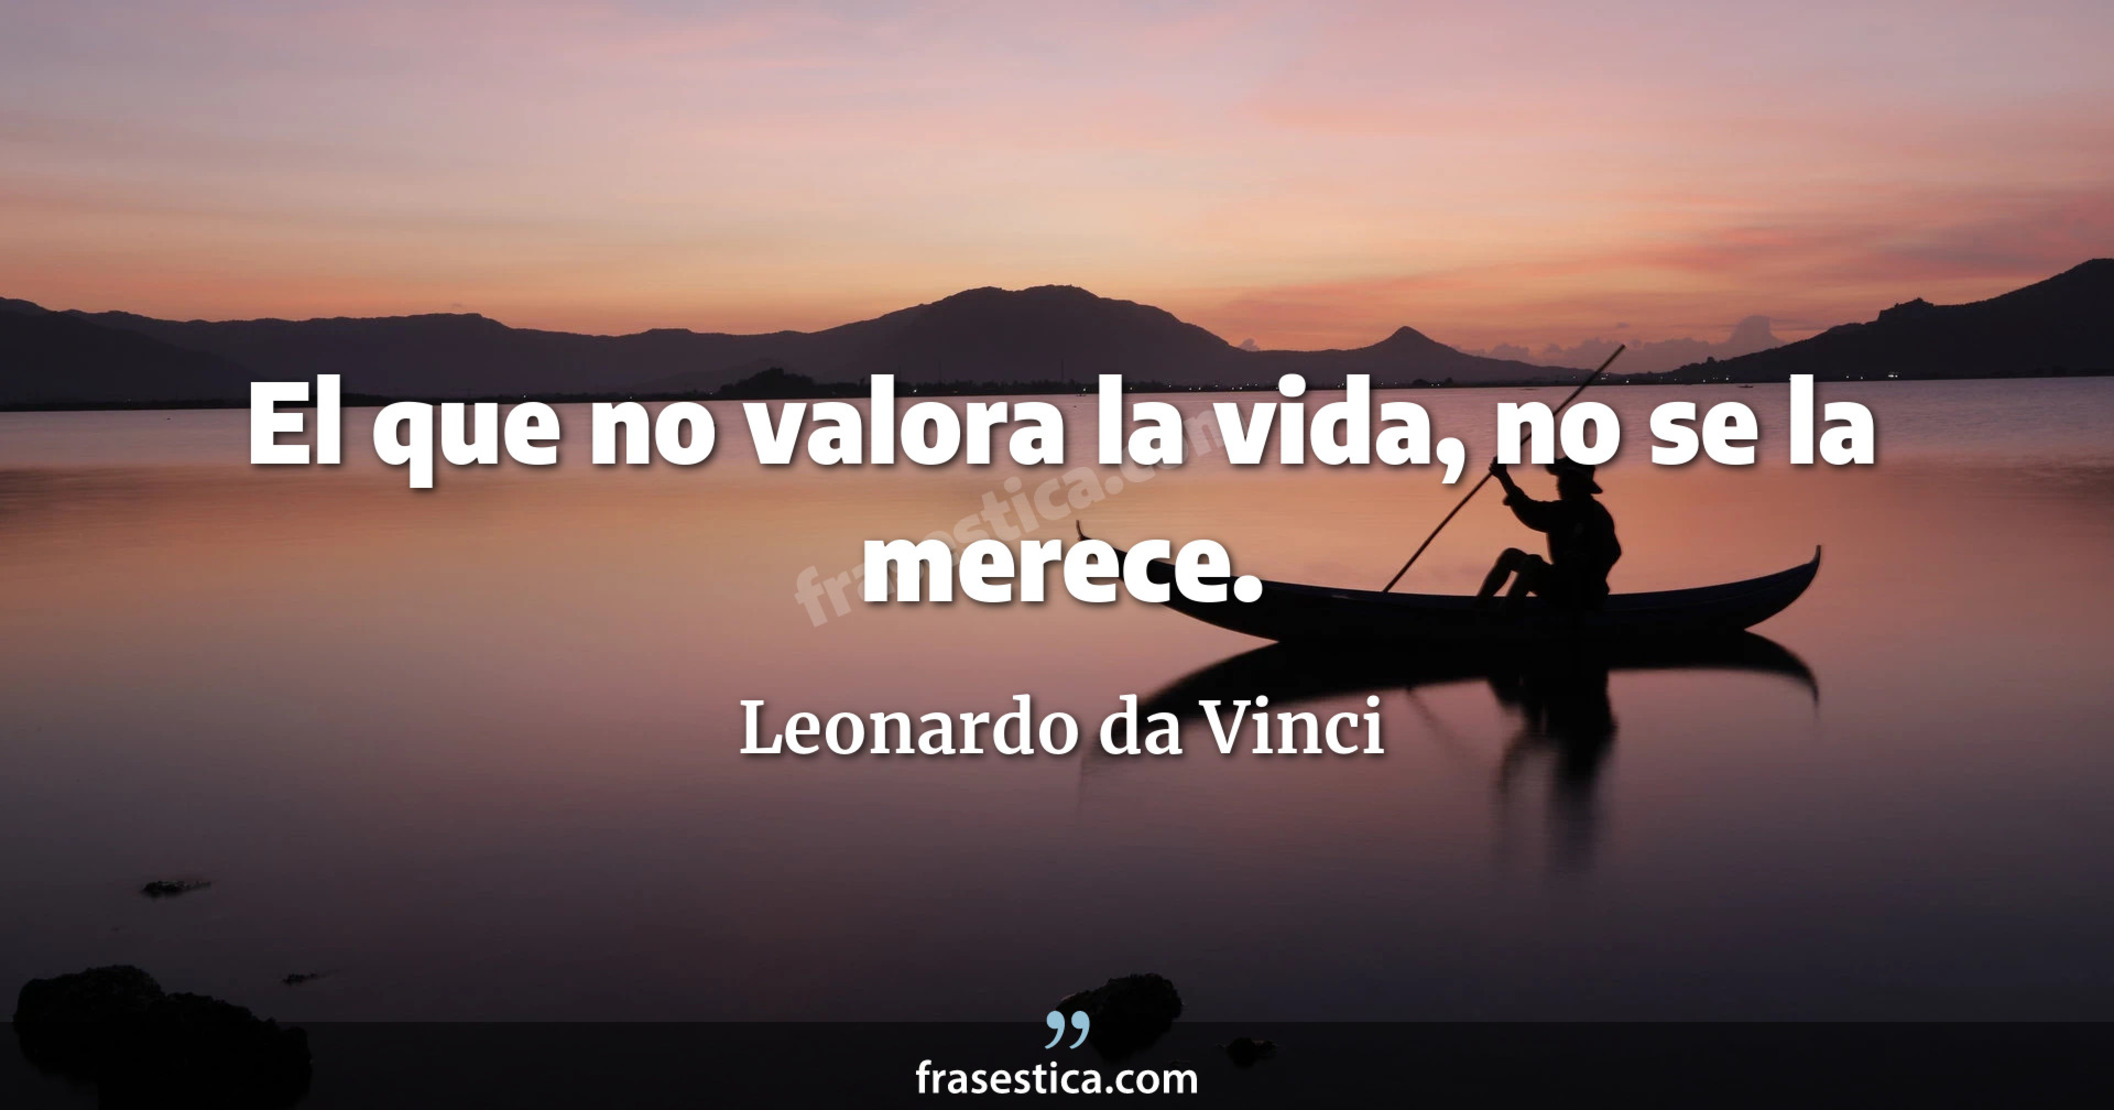 El que no valora la vida, no se la merece. - Leonardo da Vinci